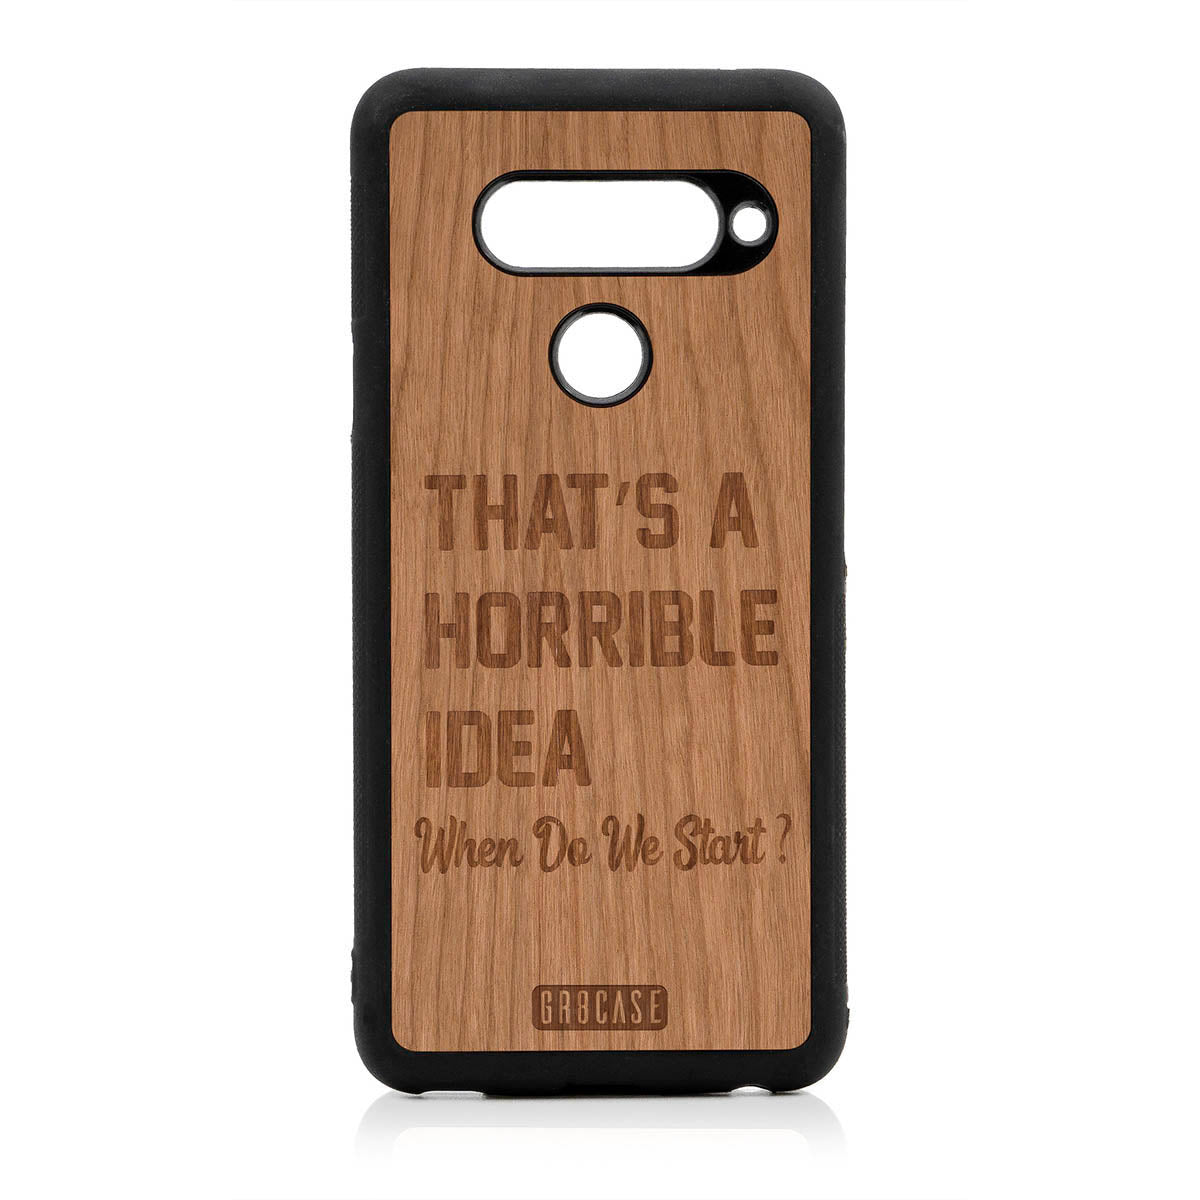 That's A Horrible Idea When Do We Start? Design Wood Case For LG V40